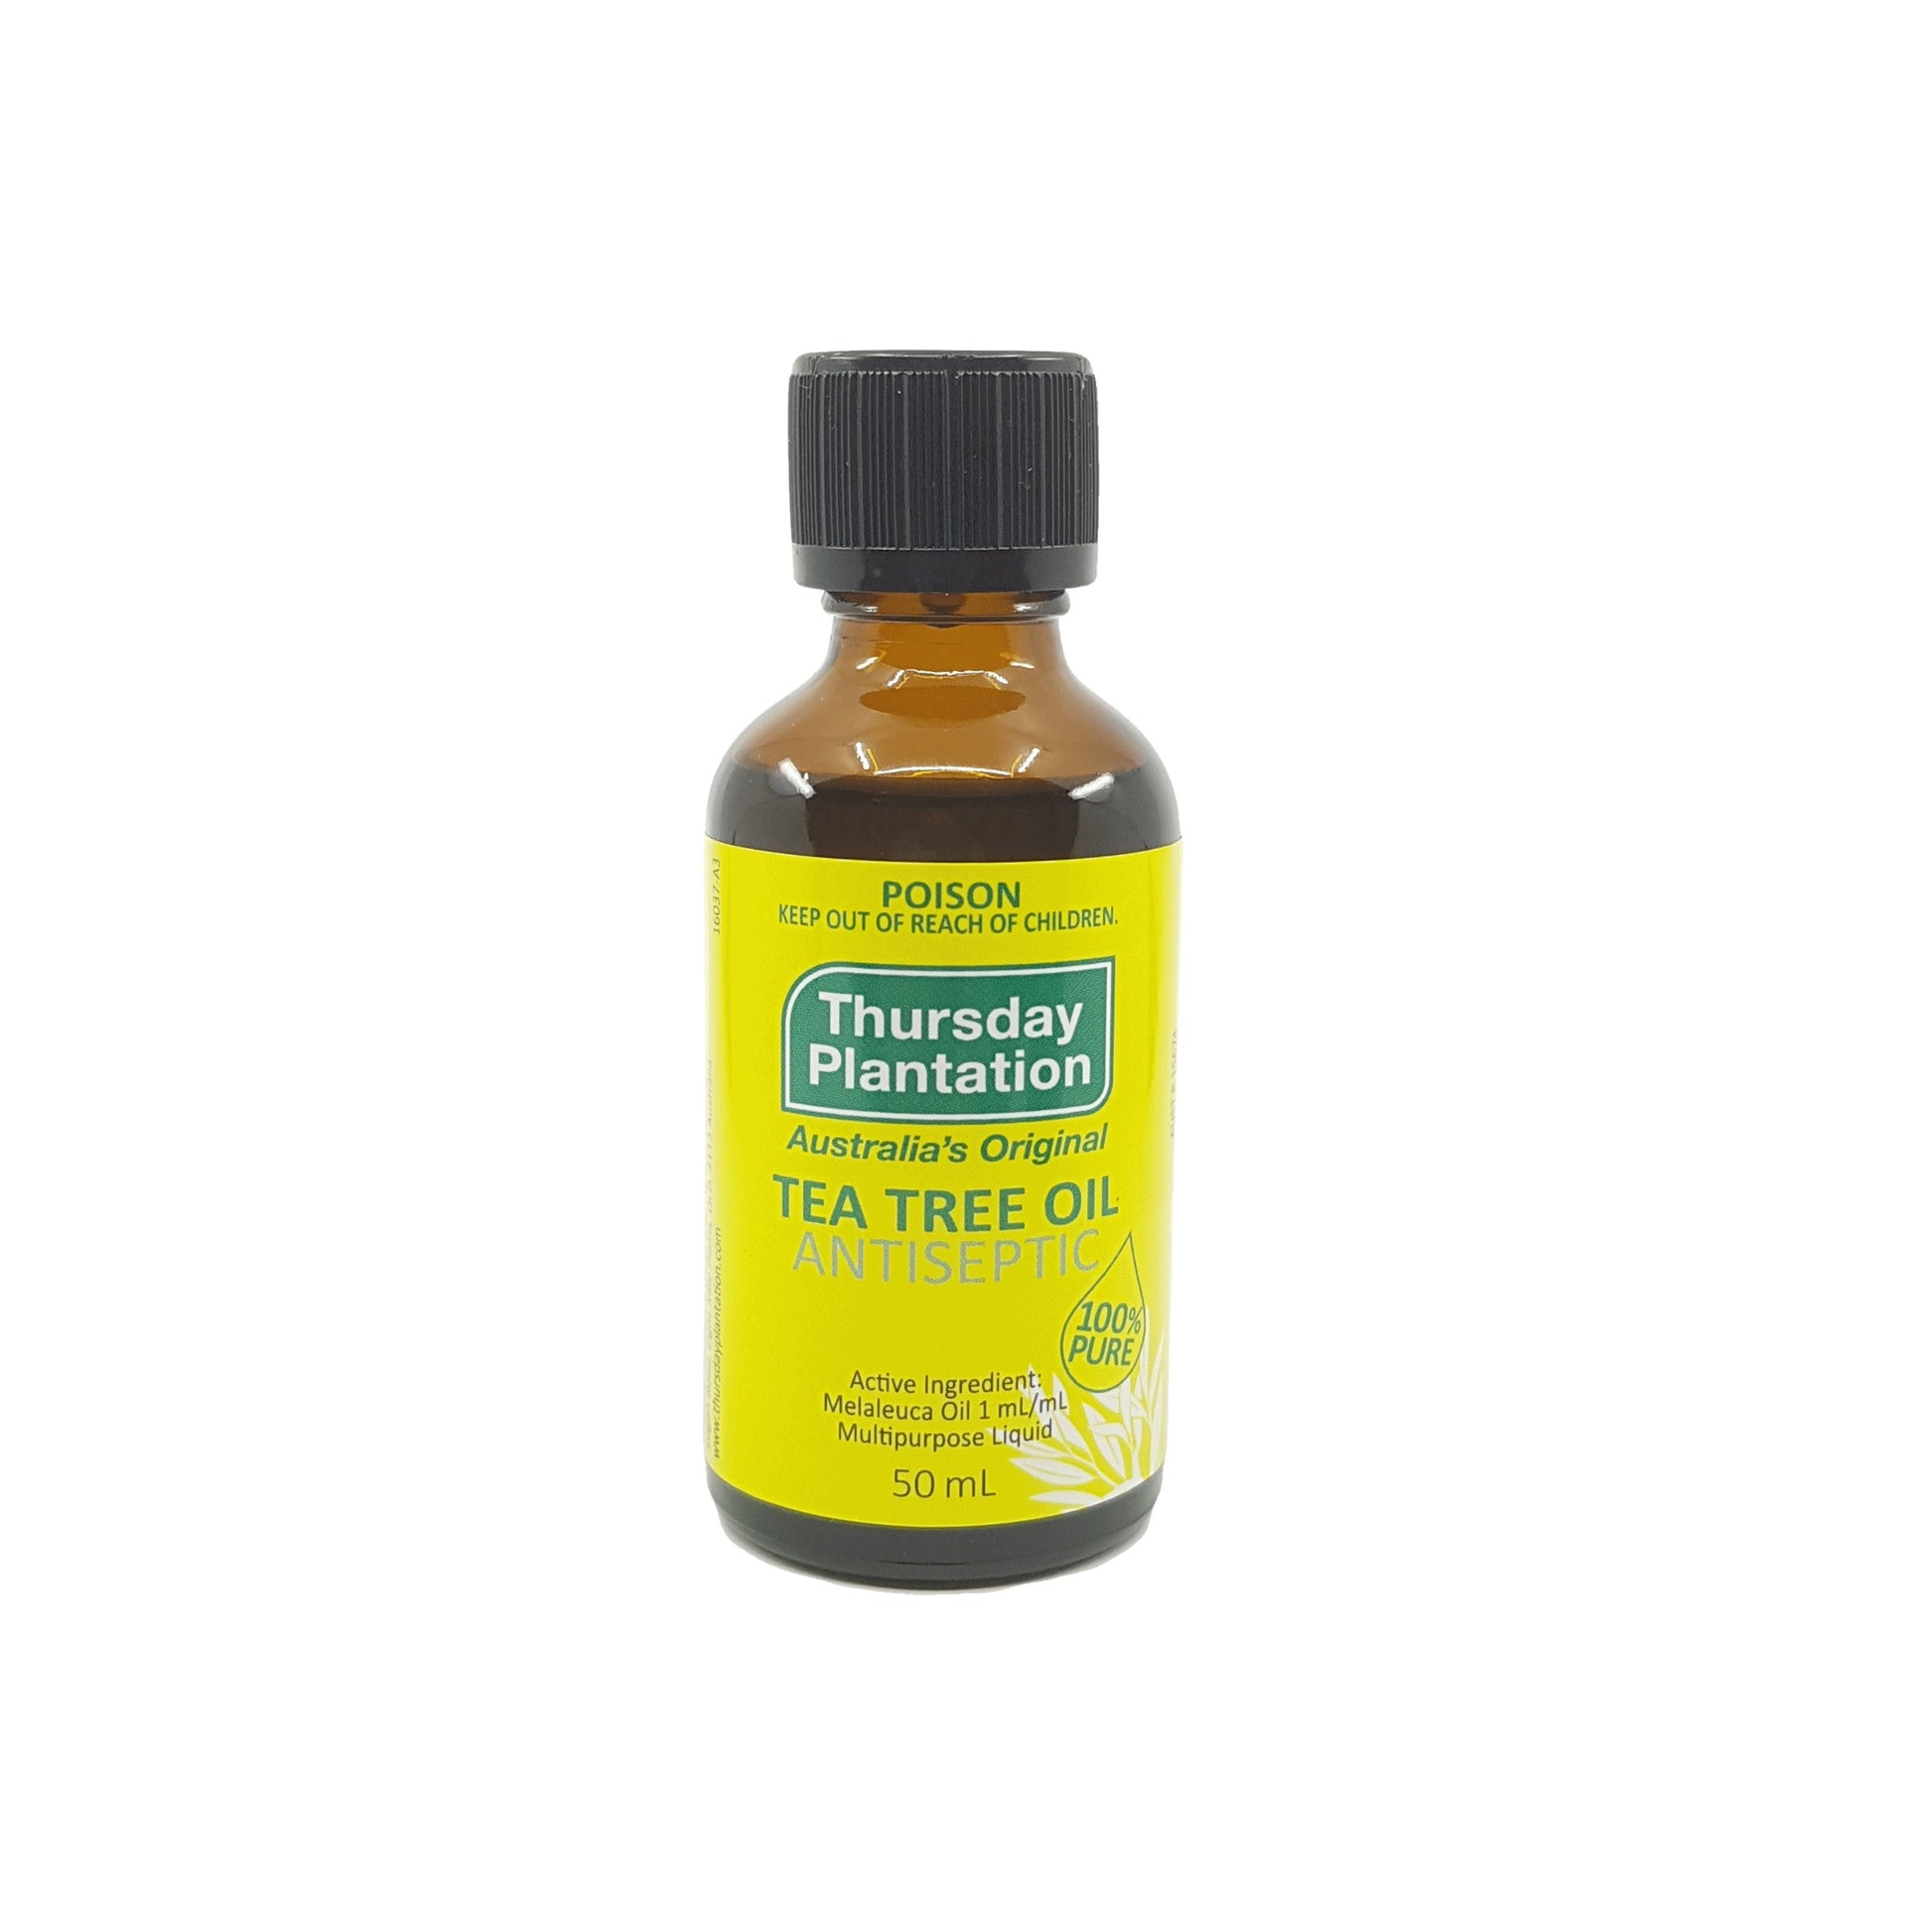 Thursday Plantation Antiseptic Tea Tree Oil 50ml